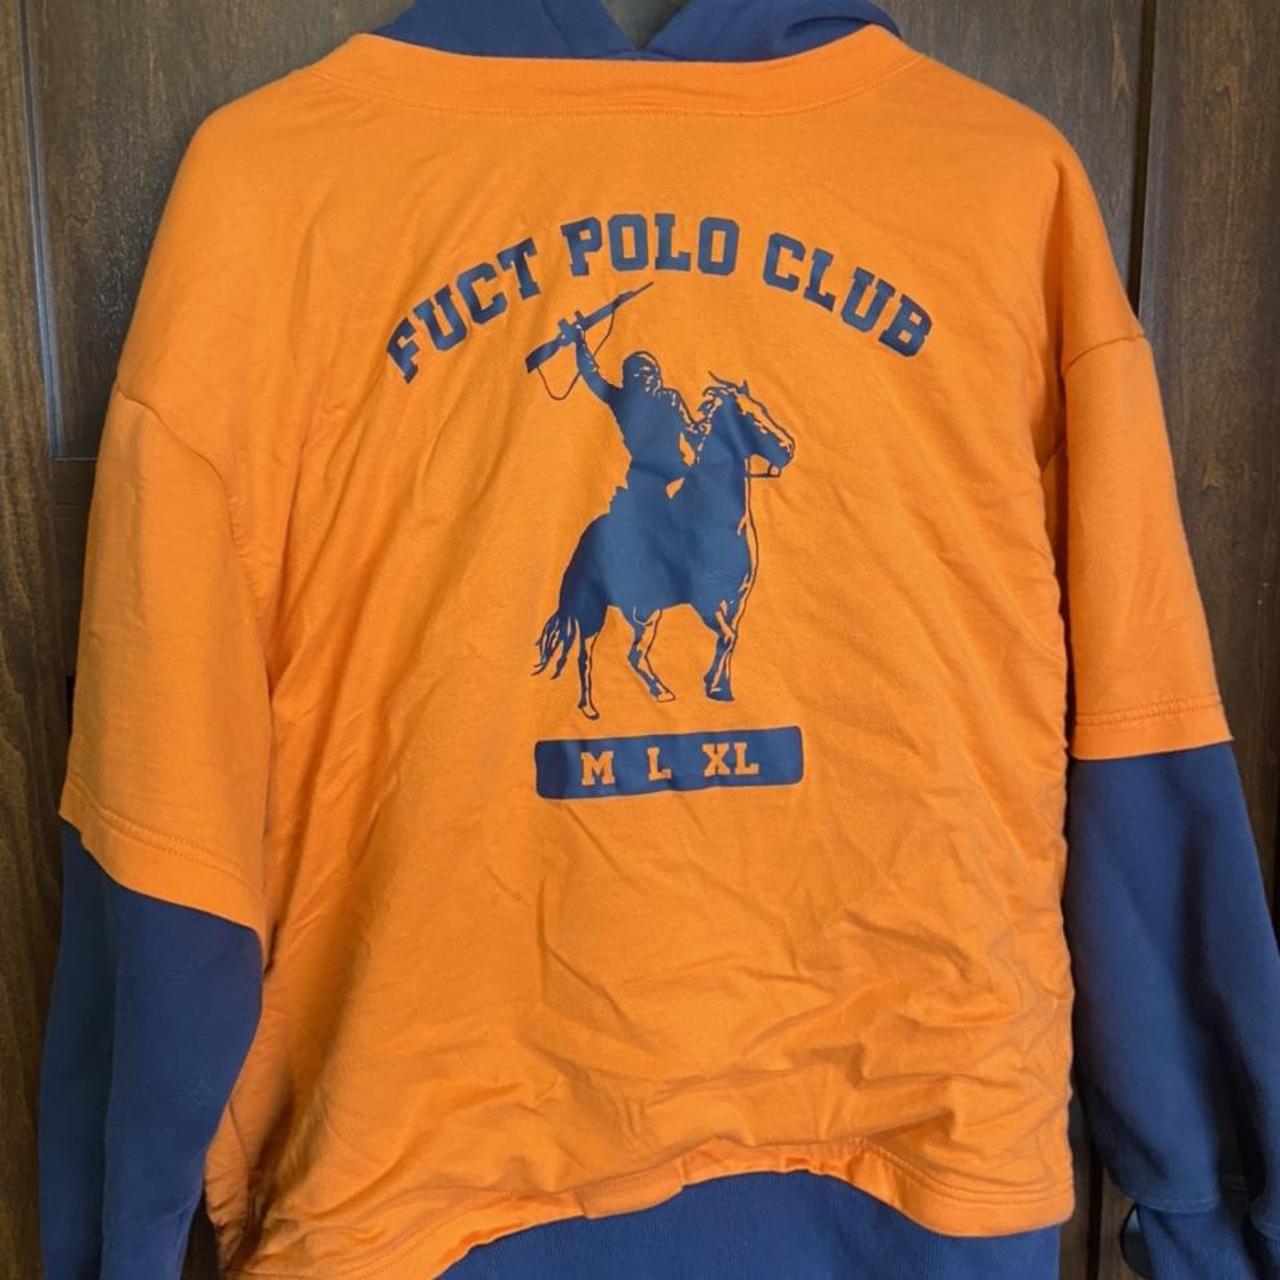 Product Image 1 - Fuct Polo Club Hoodie

Tee is